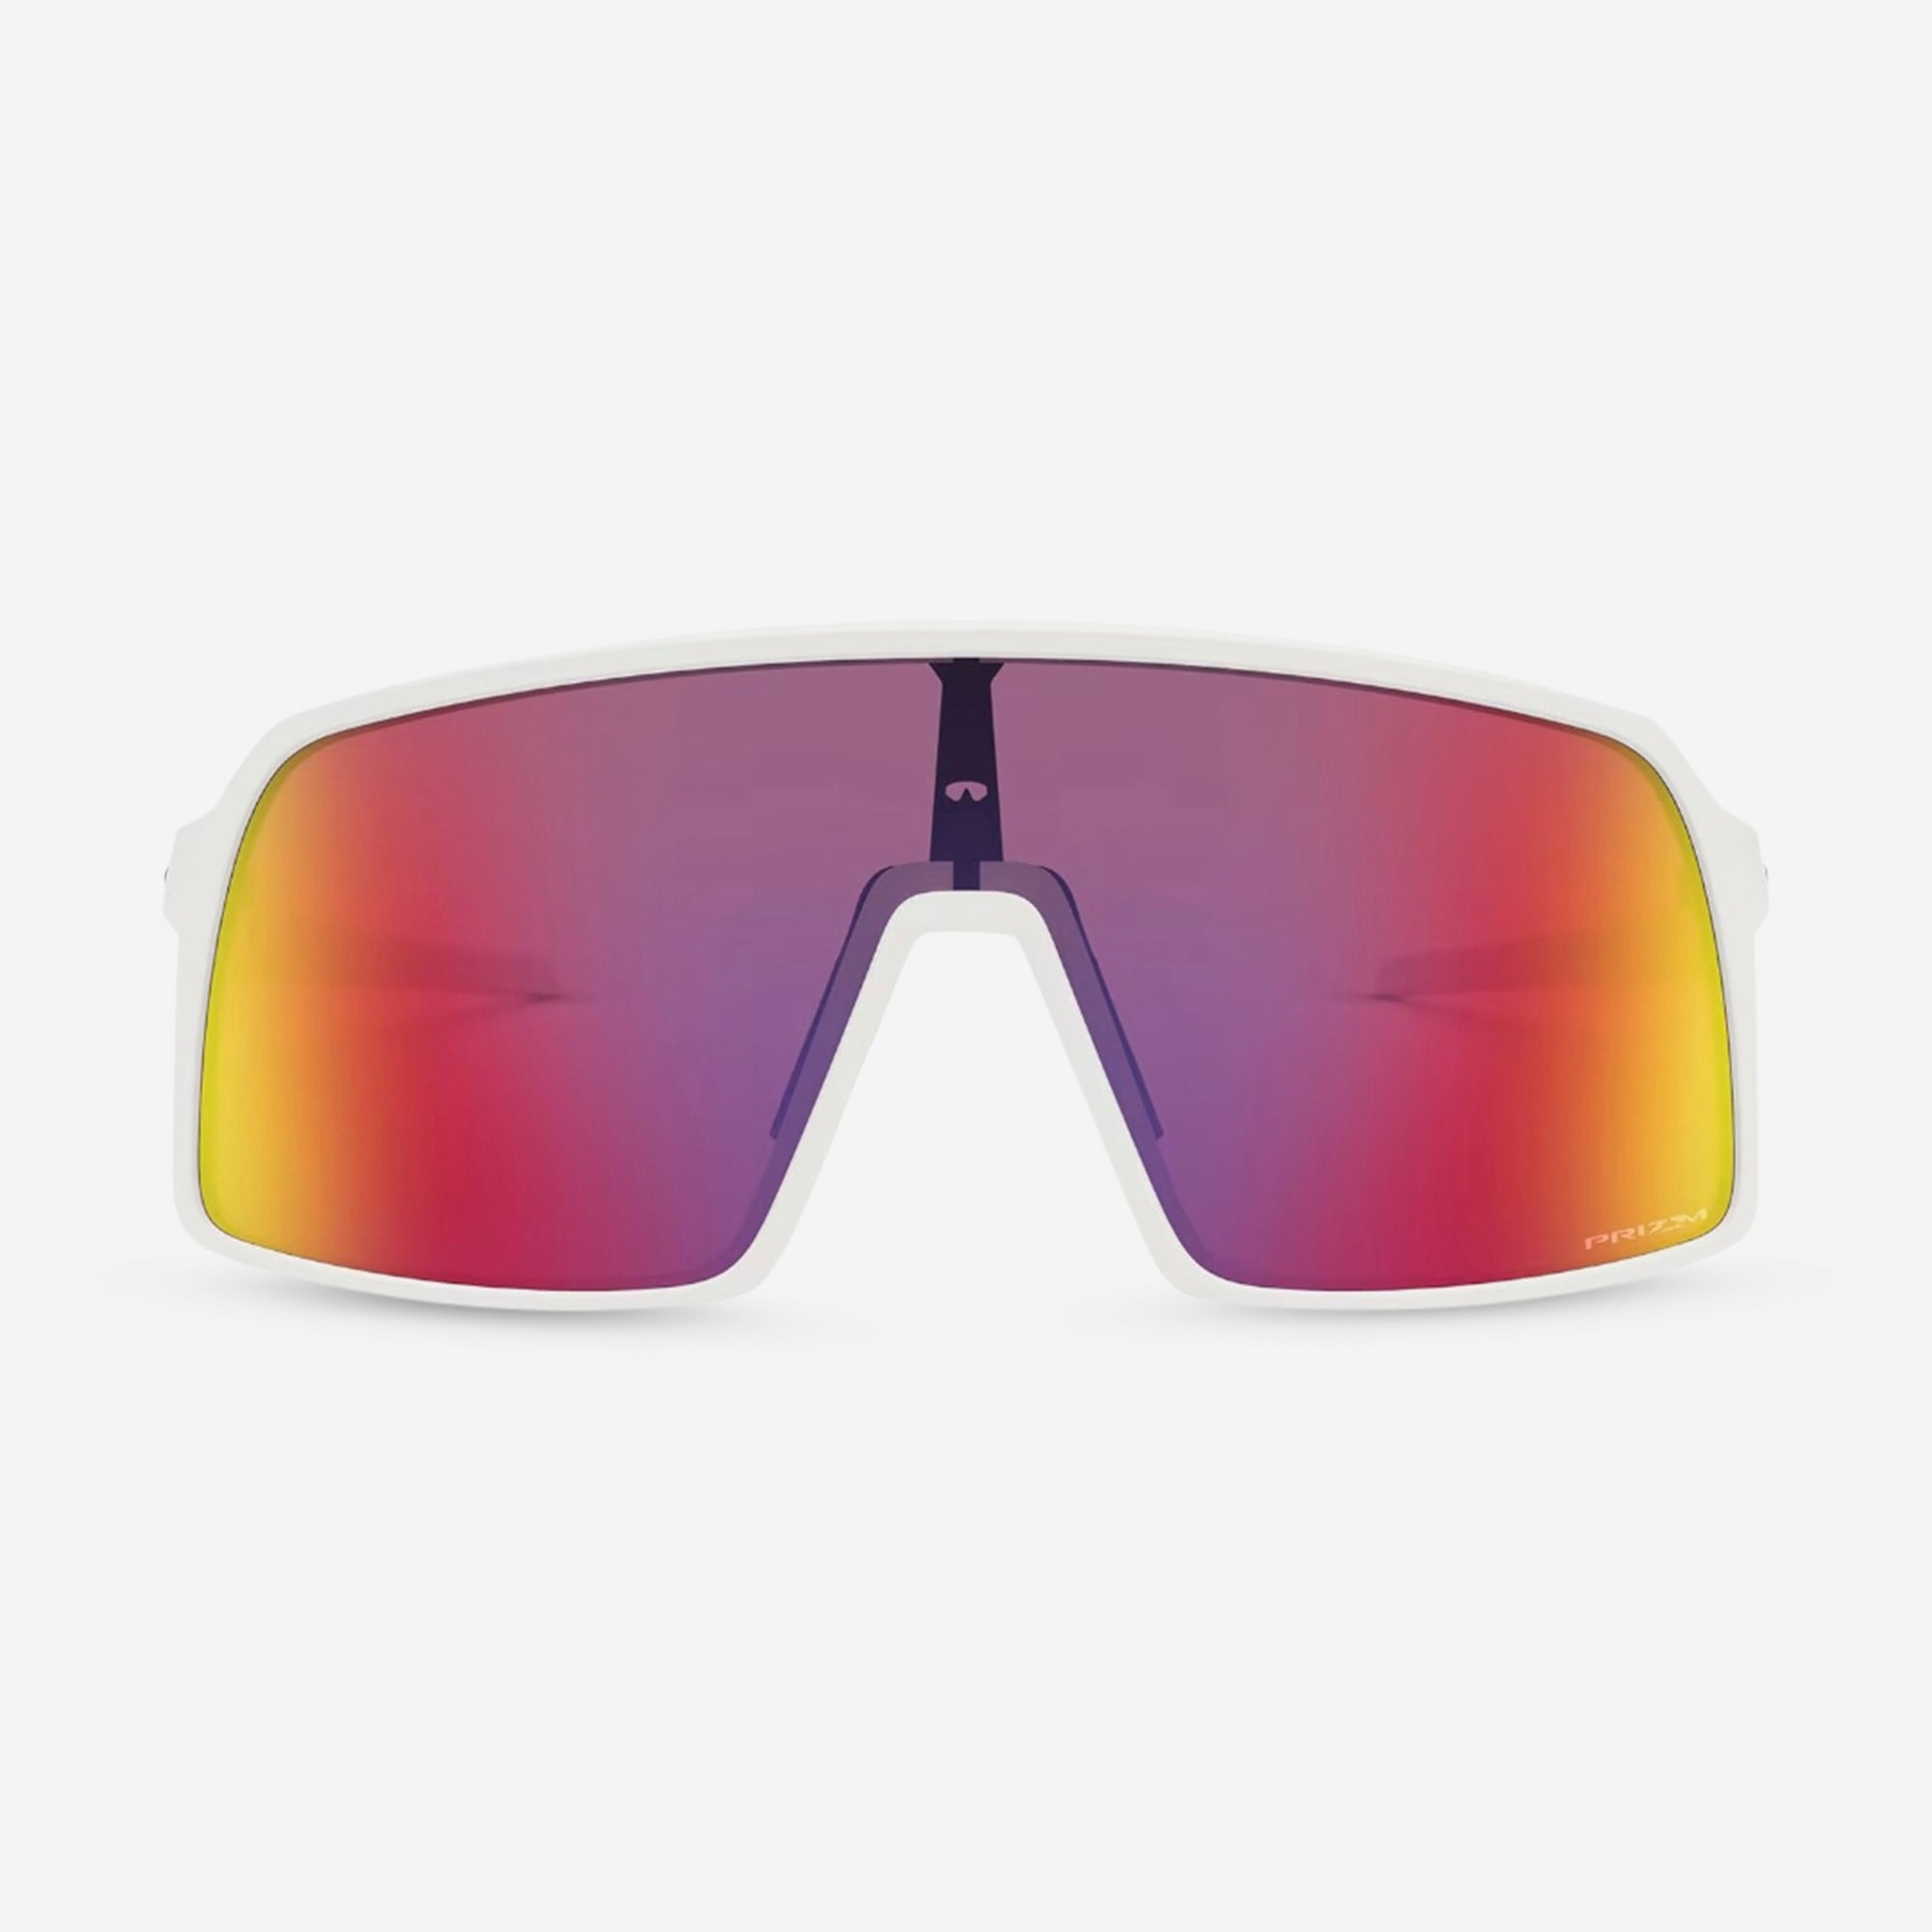 Oakley Sutro Men's Prizm Road White Frame Sunglasses 9406 - 36 - THE SOLIST - OAKLEY